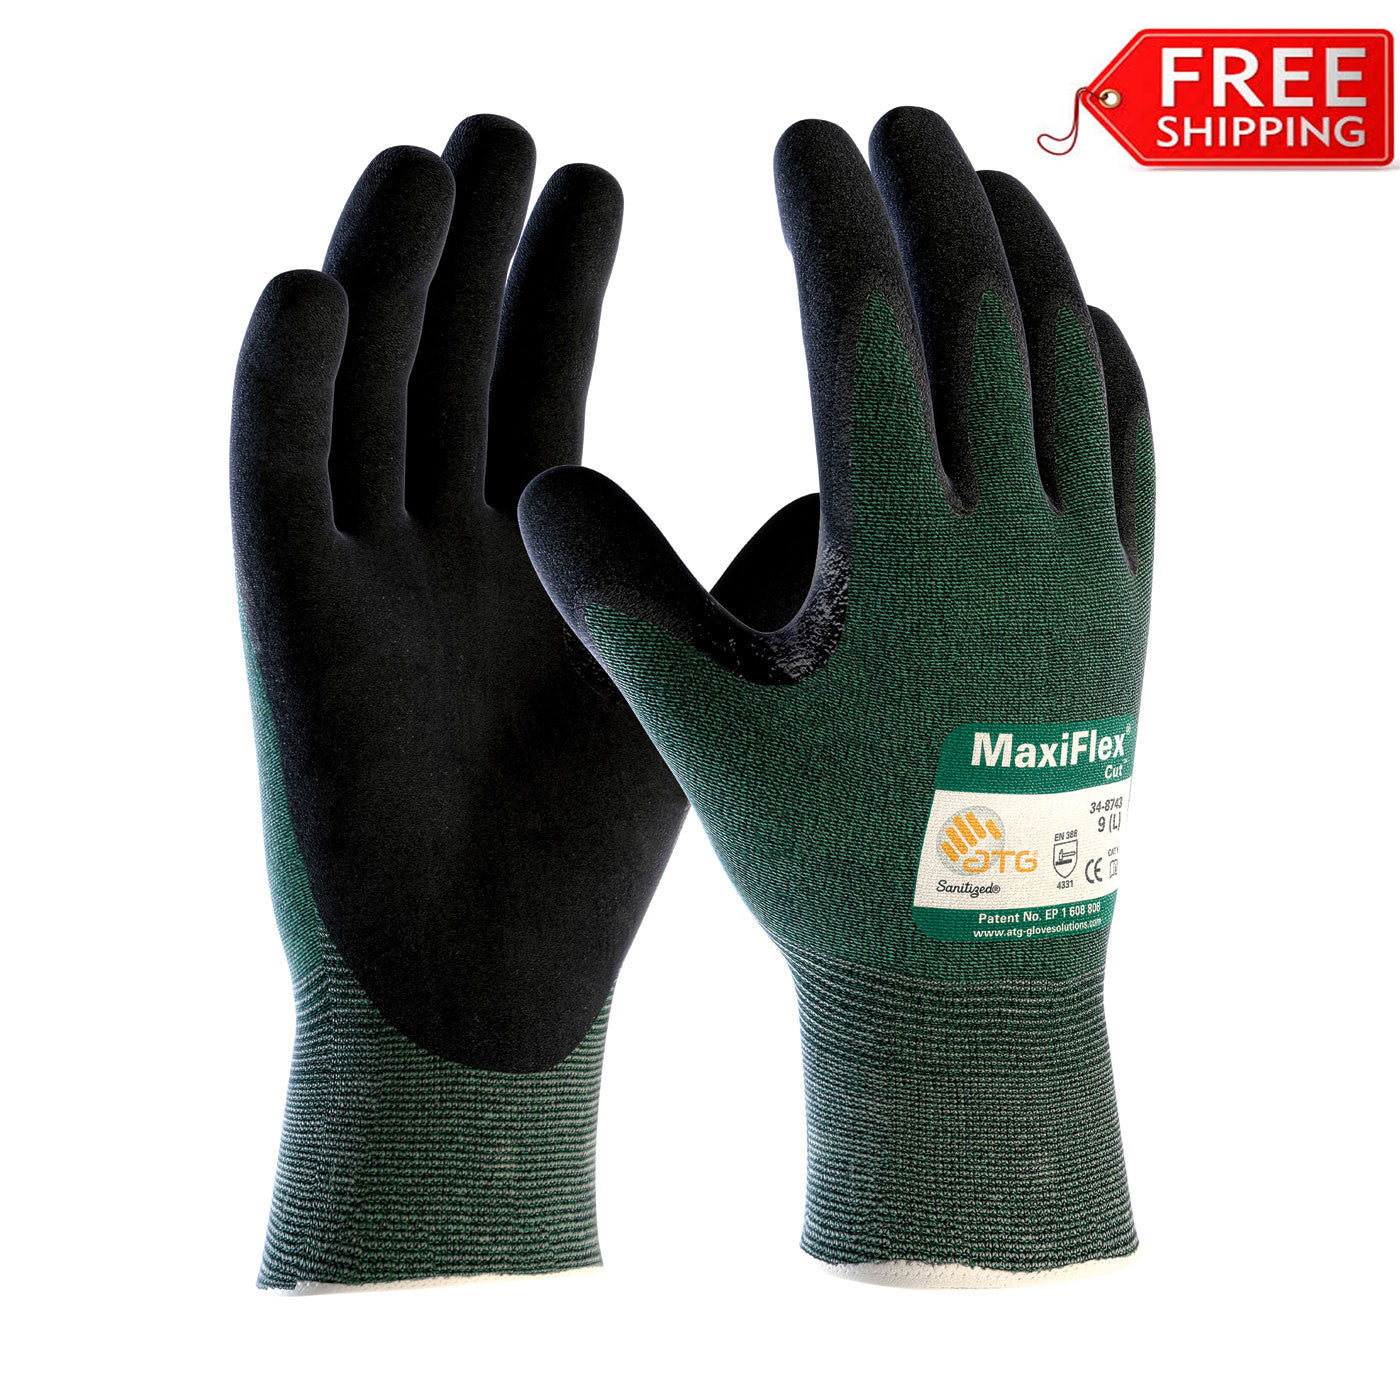 Pair of Anti-Cut, Stab Resistant Hunting Gloves*